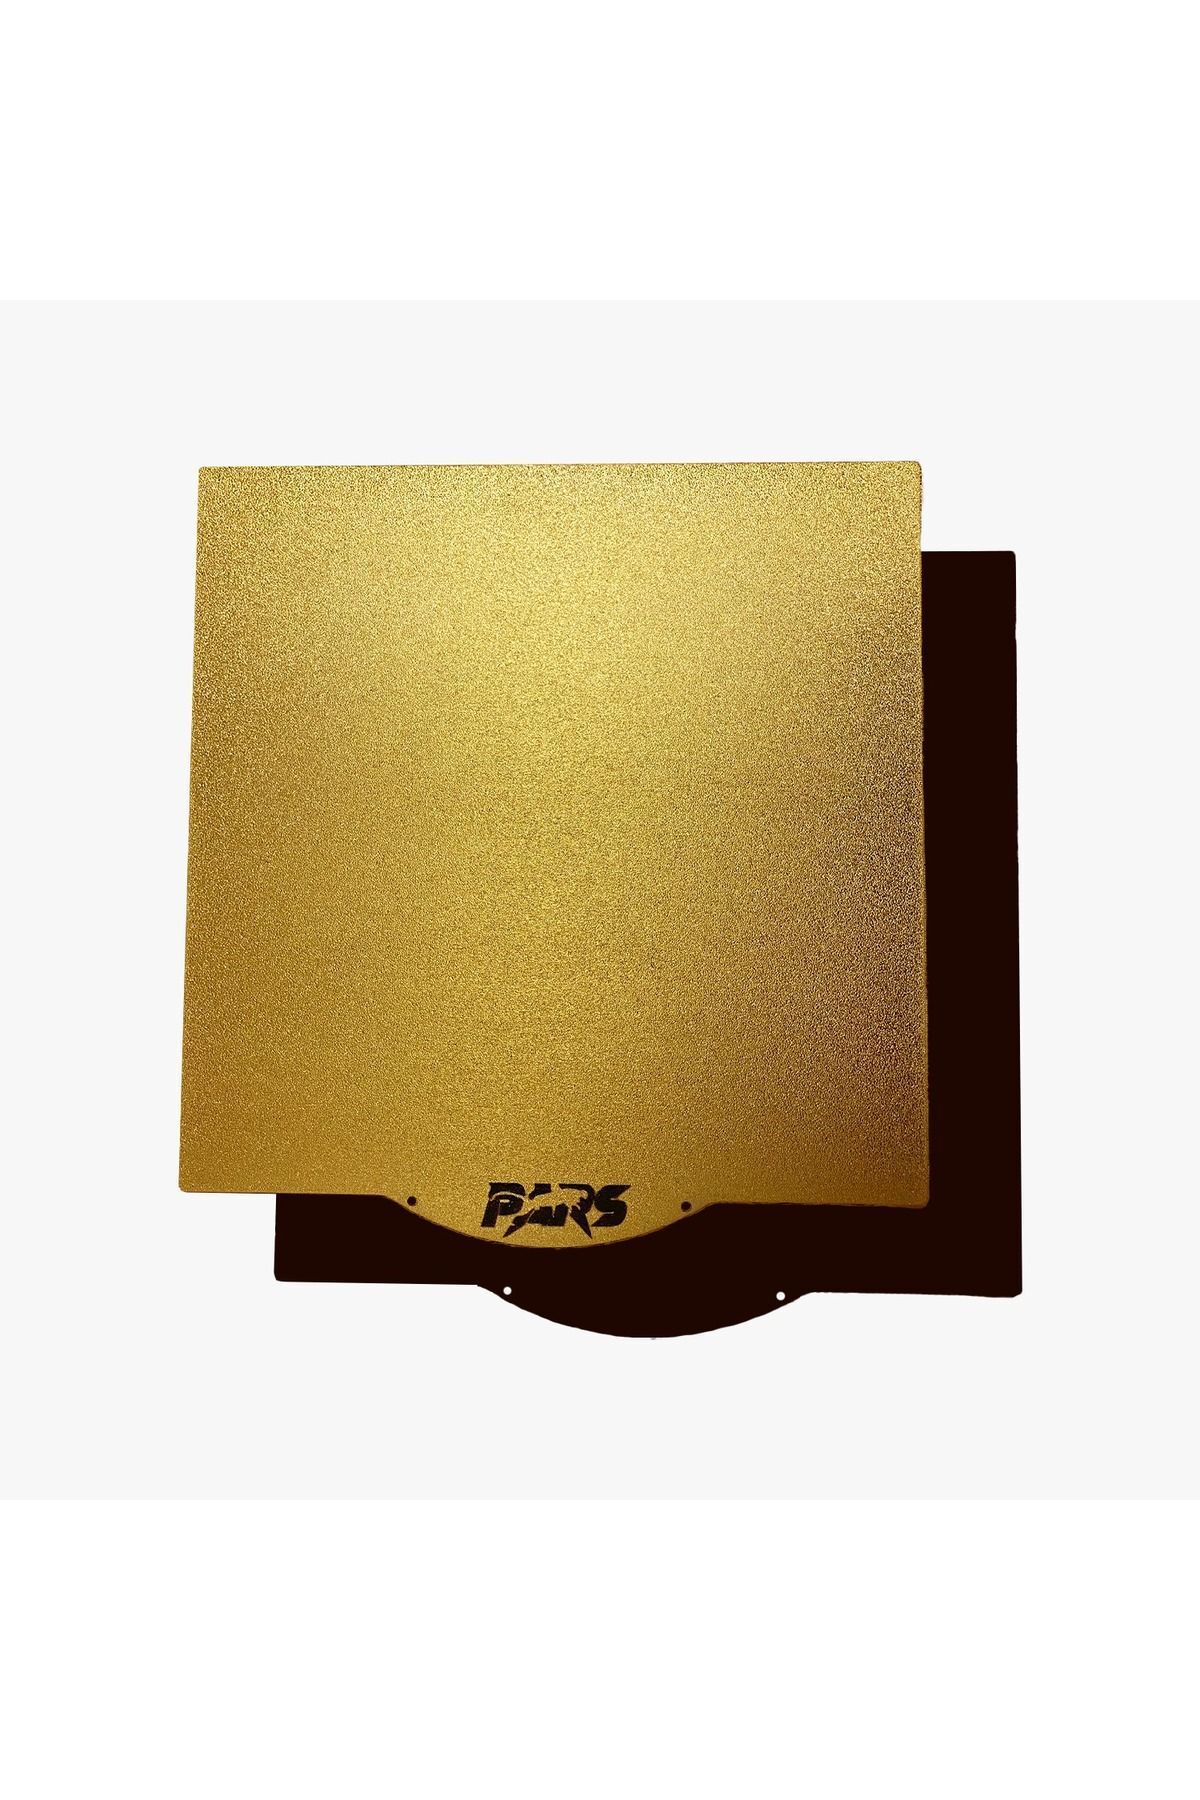 Pars 335x365 MM Pars Gold Pei Kaplı Özel Yay Çeliği Tabla Magnetli